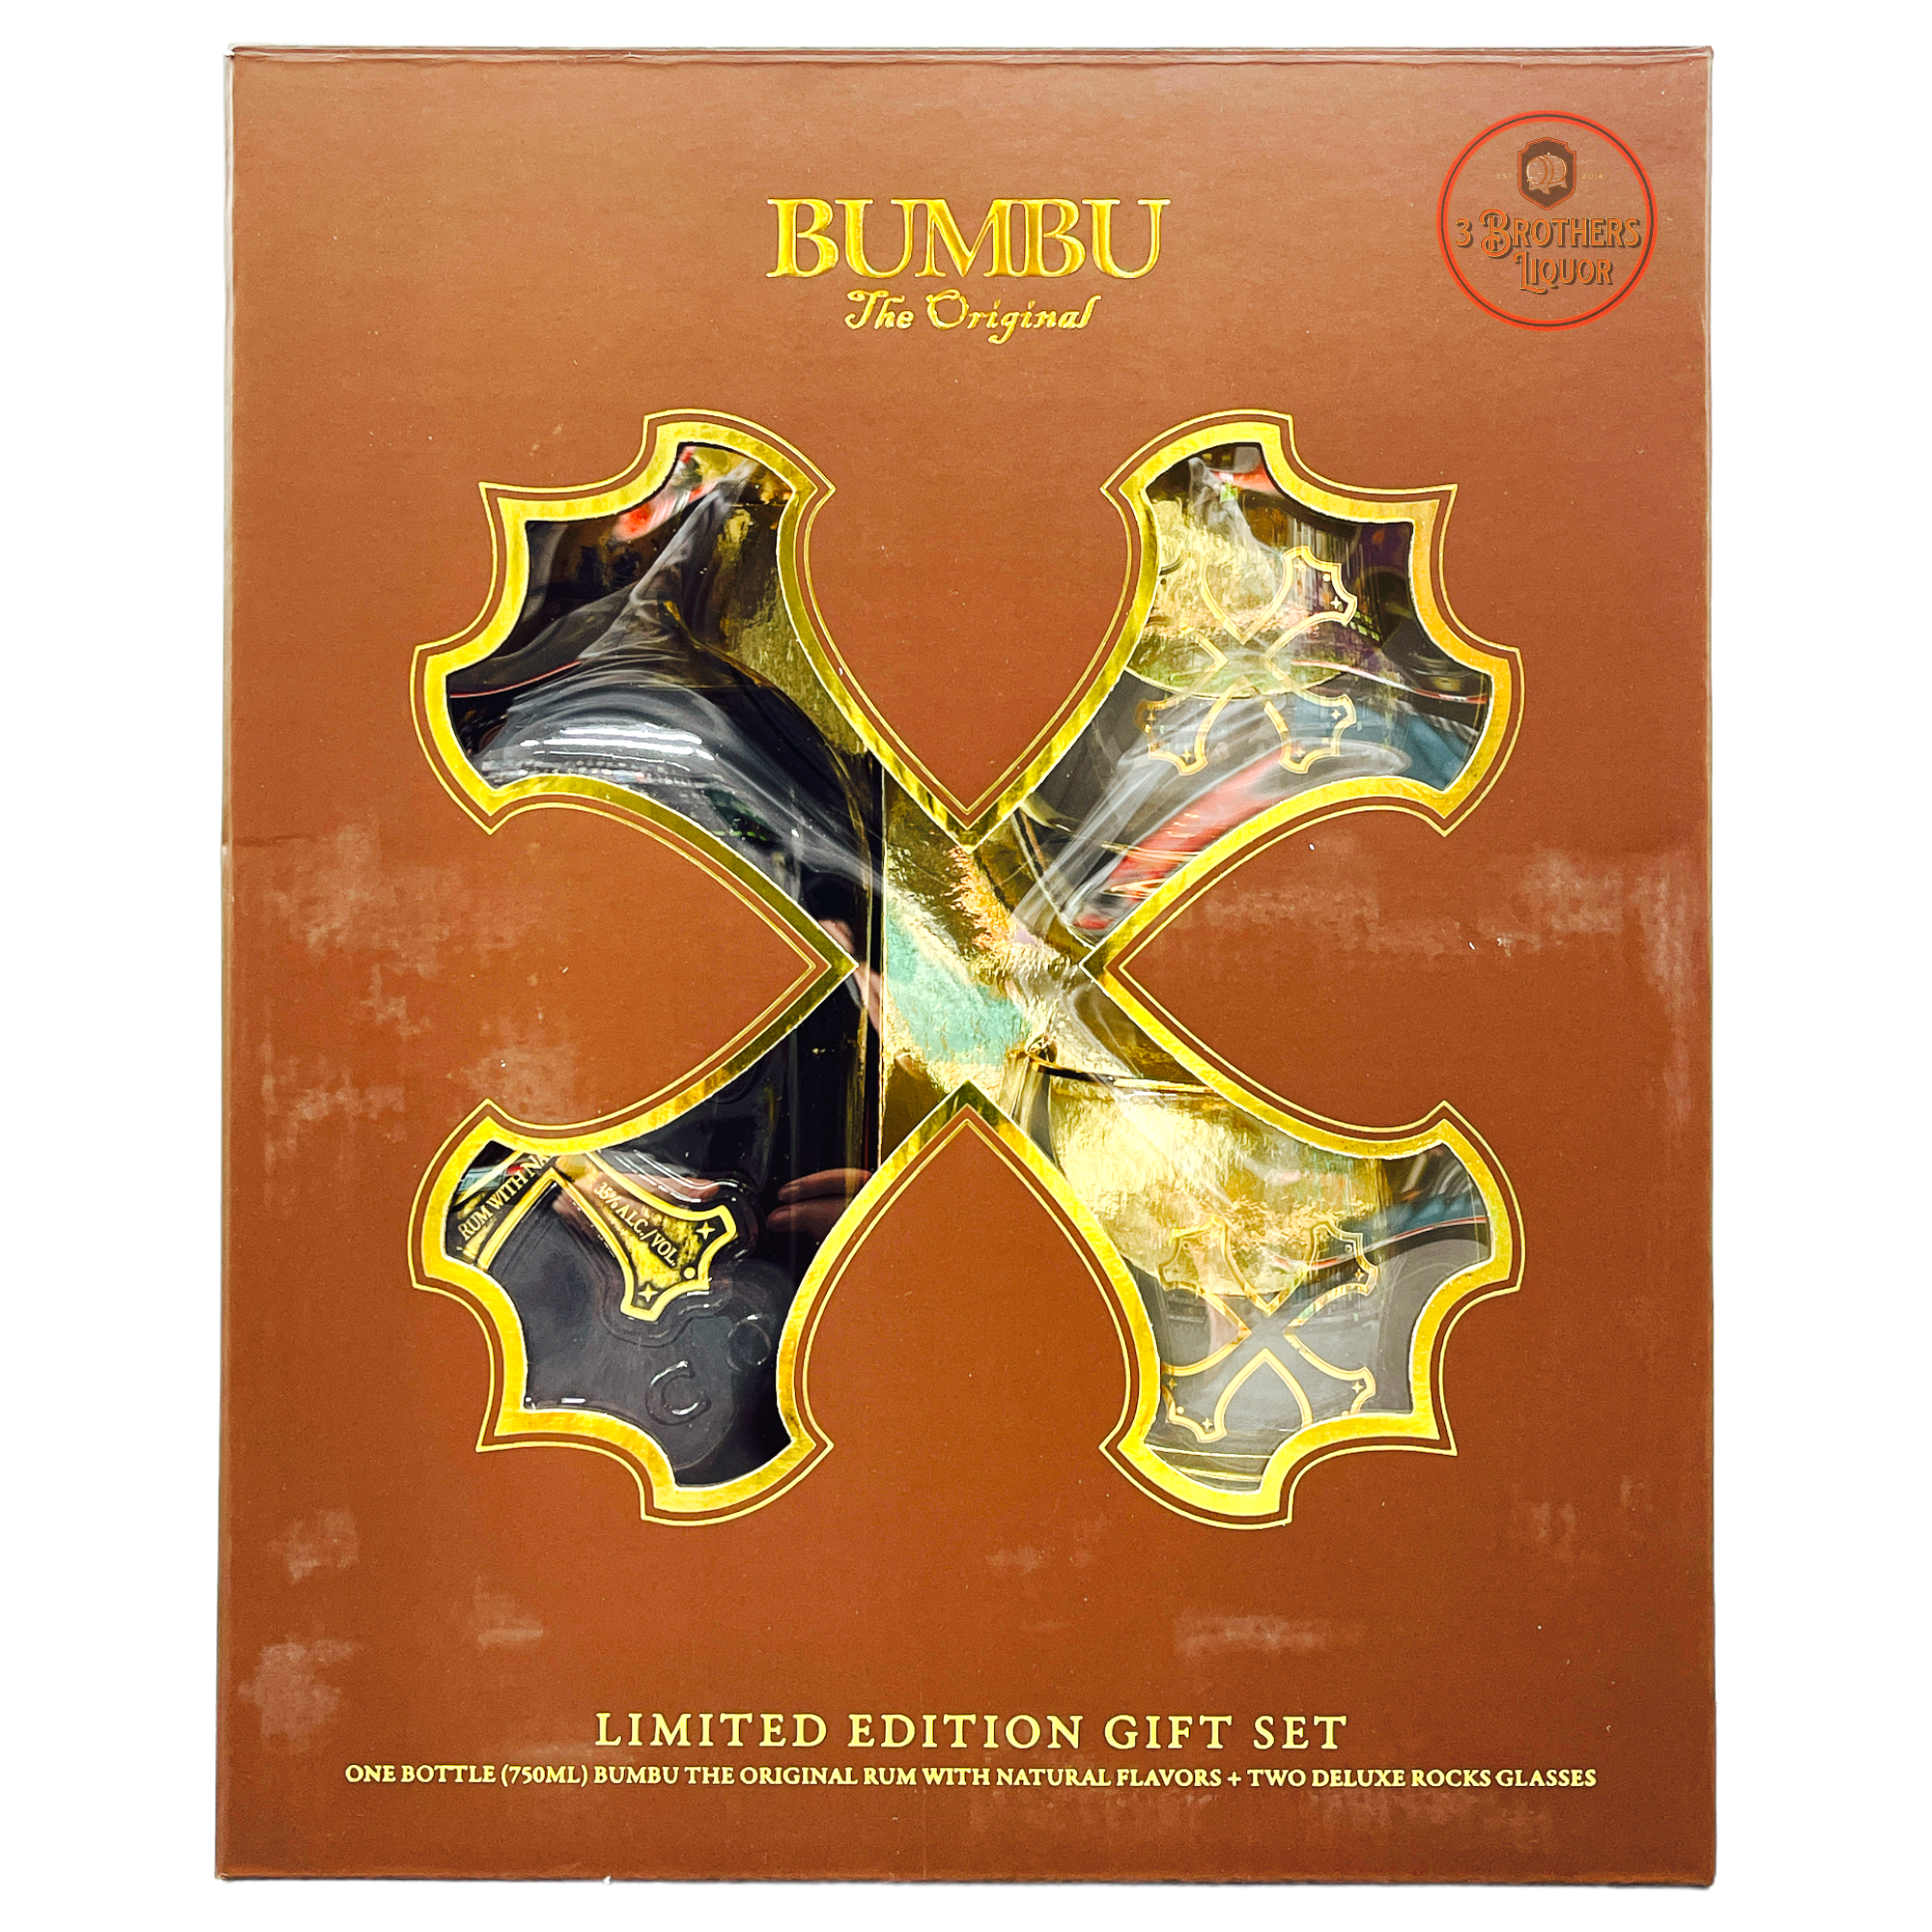 Bumbu Cream in Limited Edition Box